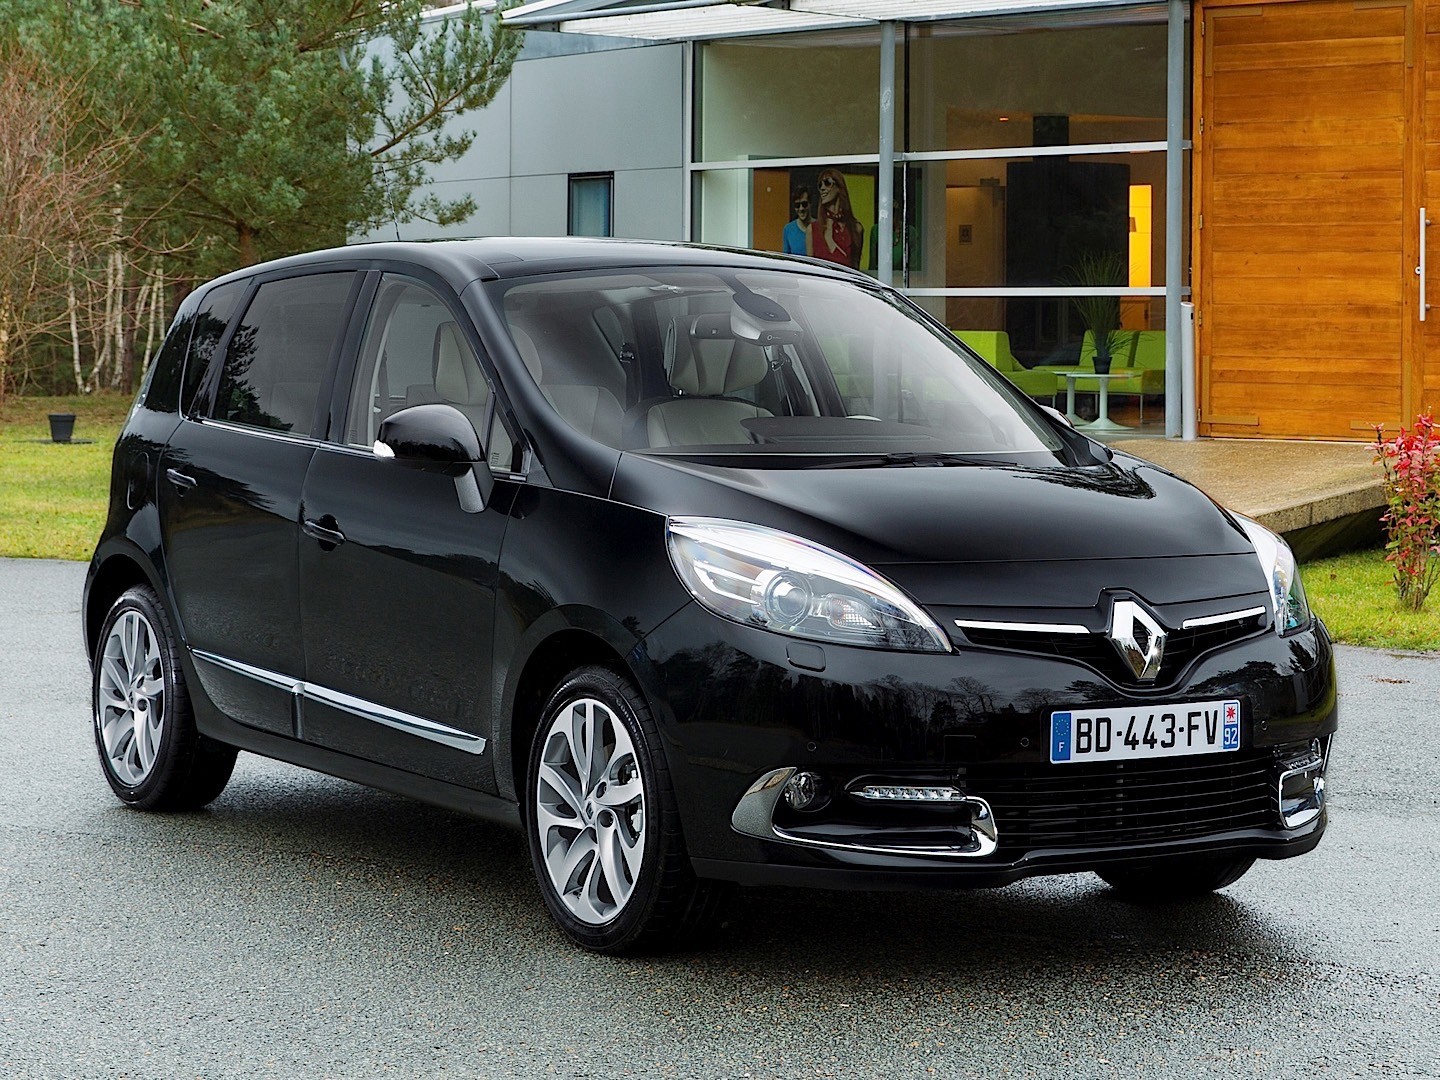 Contract tobben Grazen 2013 Renault Scenic Specs & Photos - autoevolution